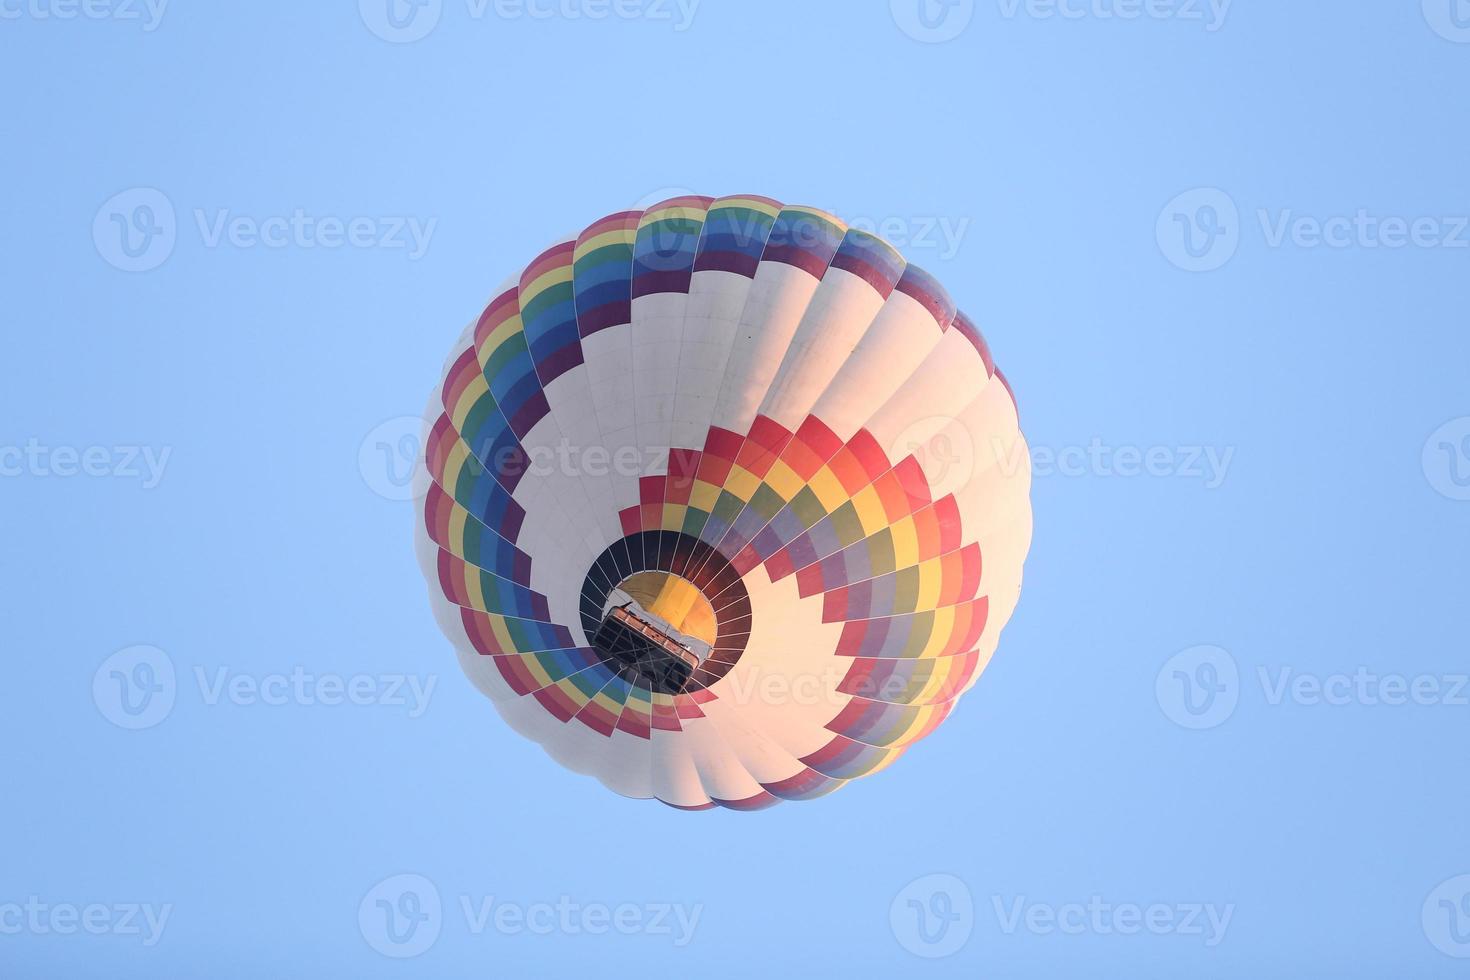 Hot Air Balloon Over Goreme Town photo